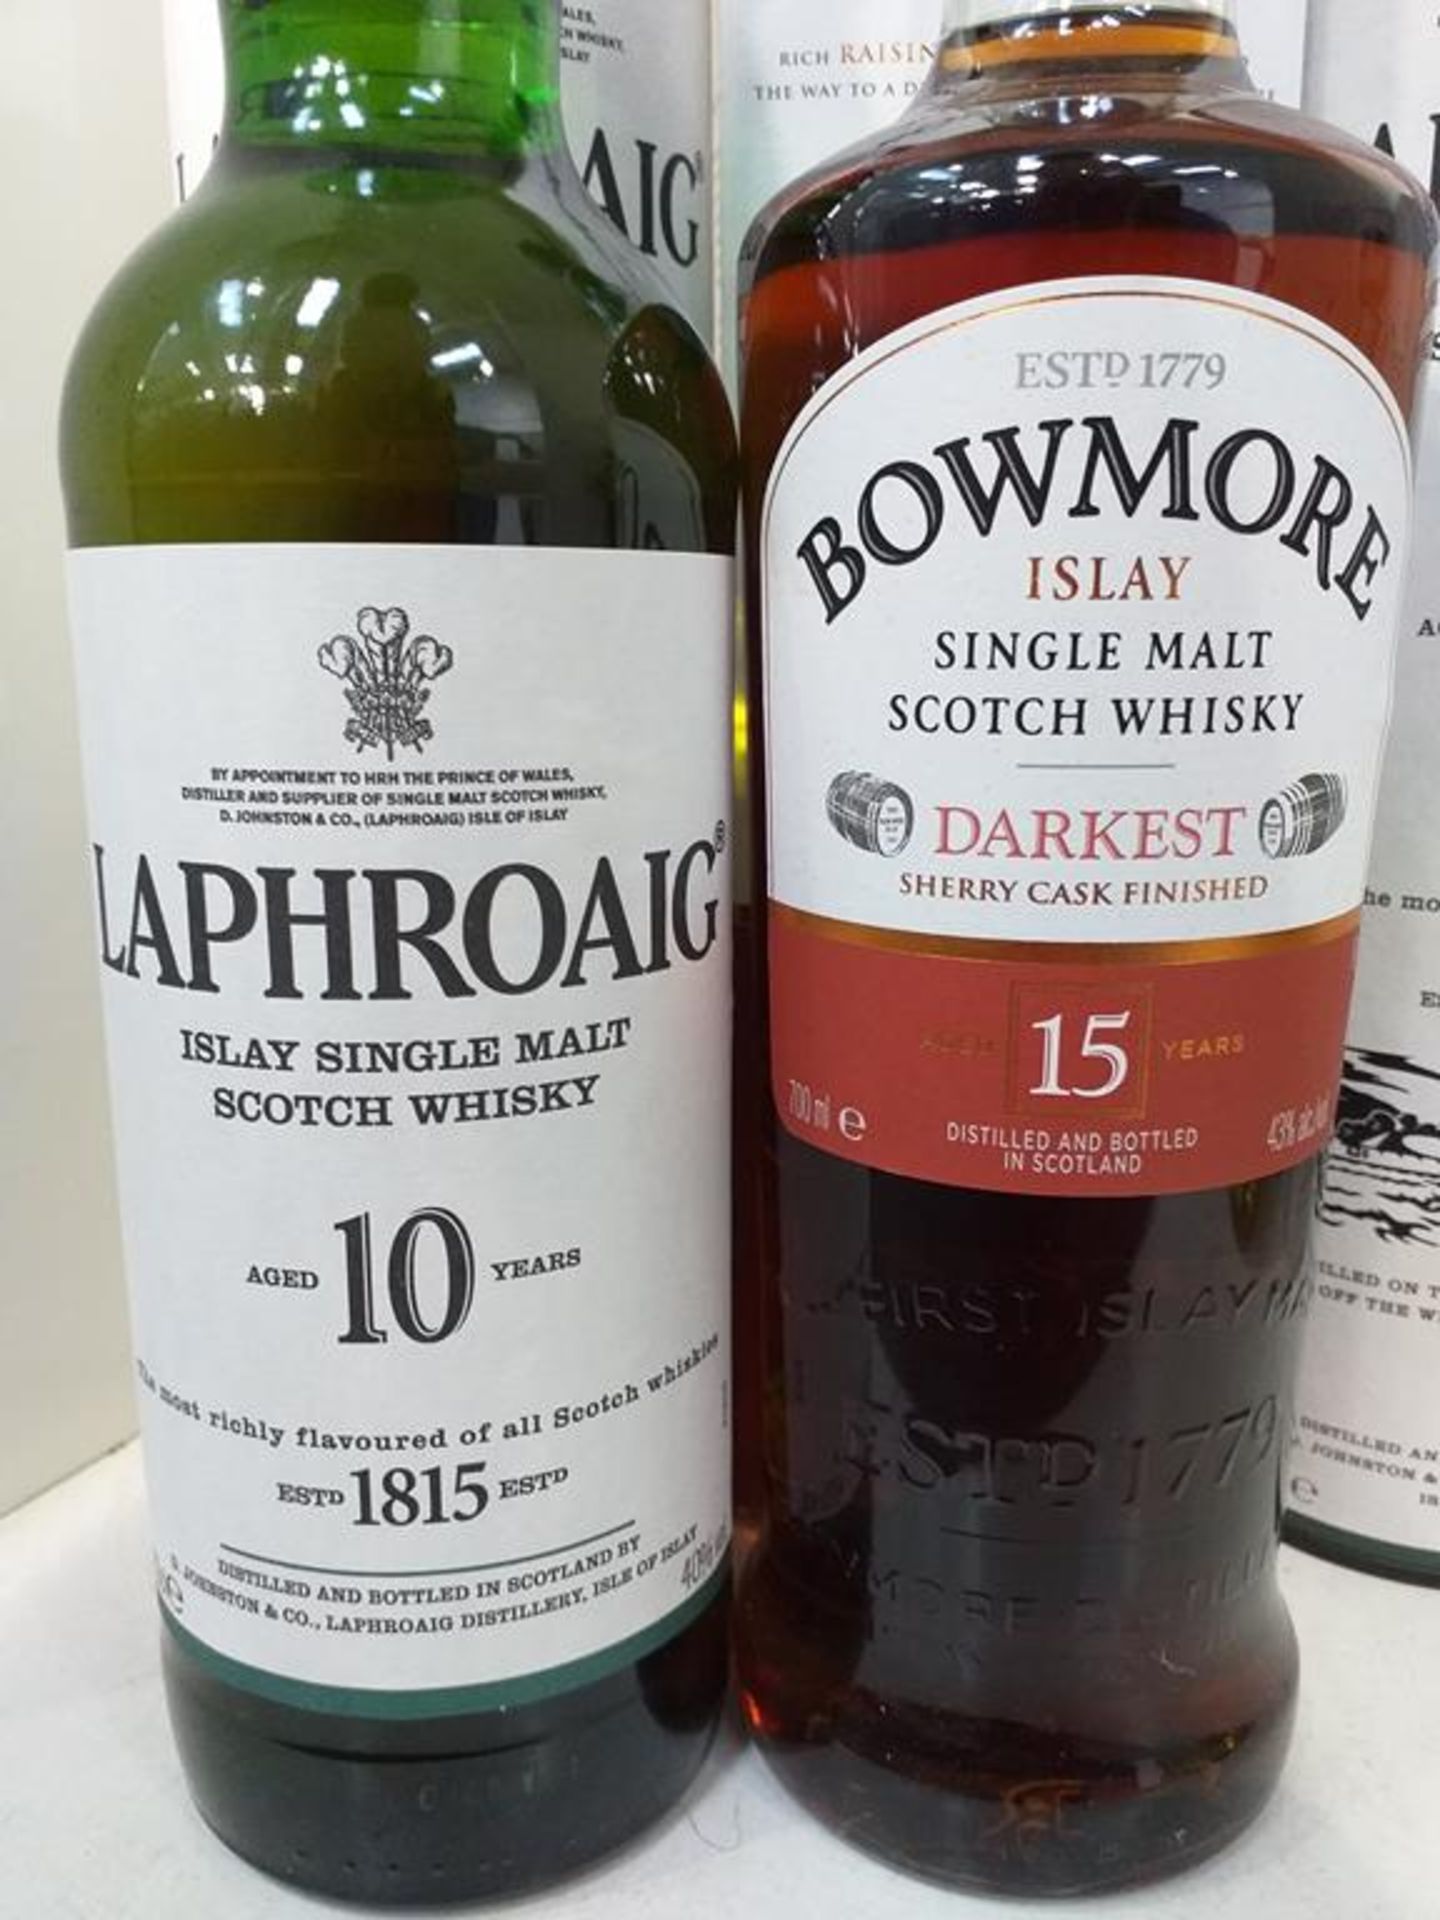 Two bottles of Laphroaig Islay Single Malt Scotch Whisky and a bottle of Bowmore Islay Single Malt - Image 3 of 4